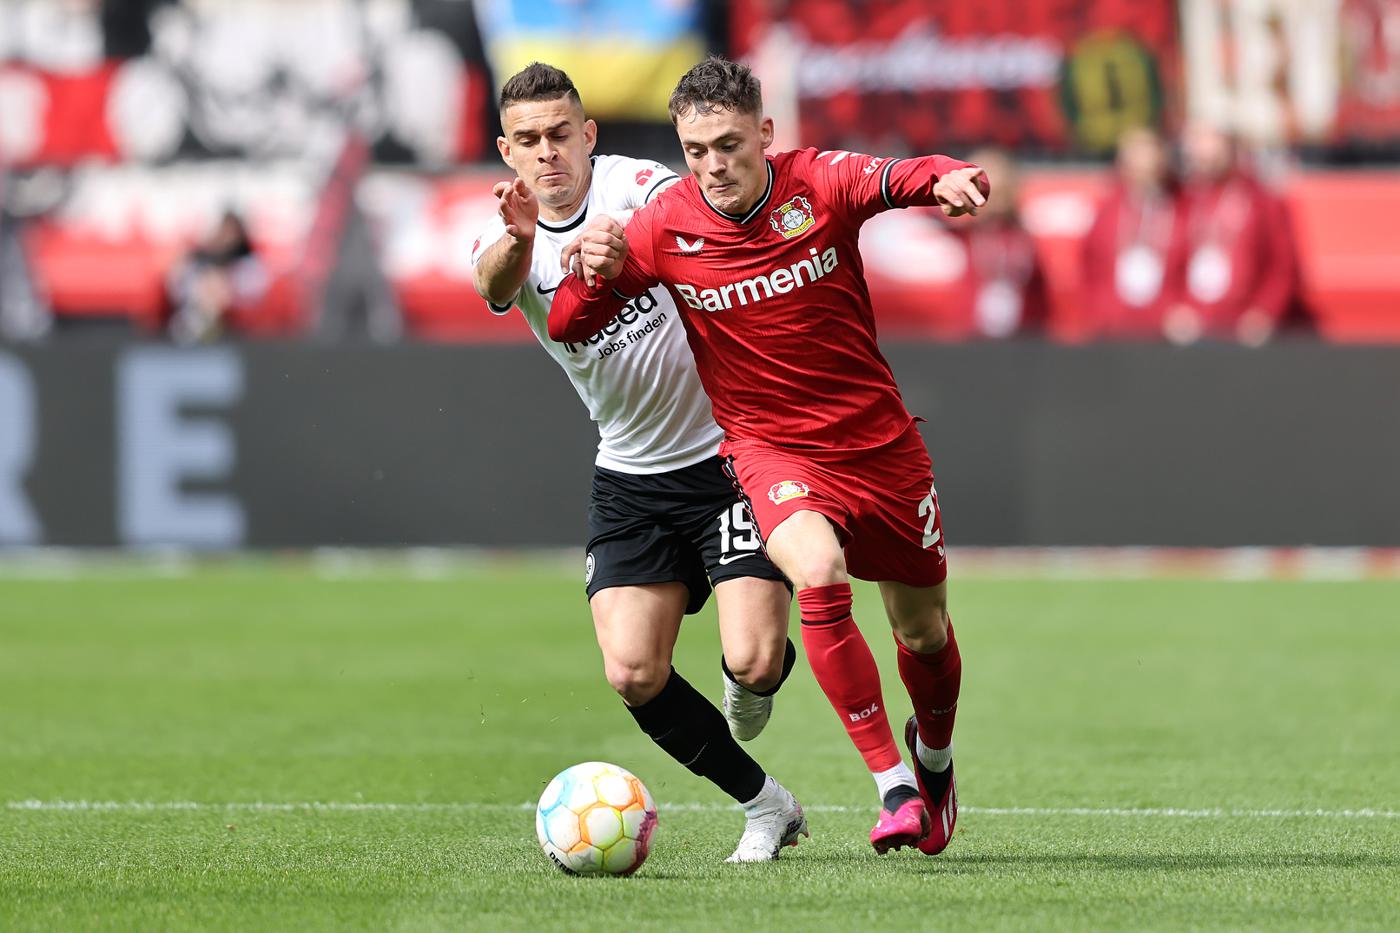 Bayer - Eintracht - 3:1. German Championship, round 27. Review of the match, statistics.